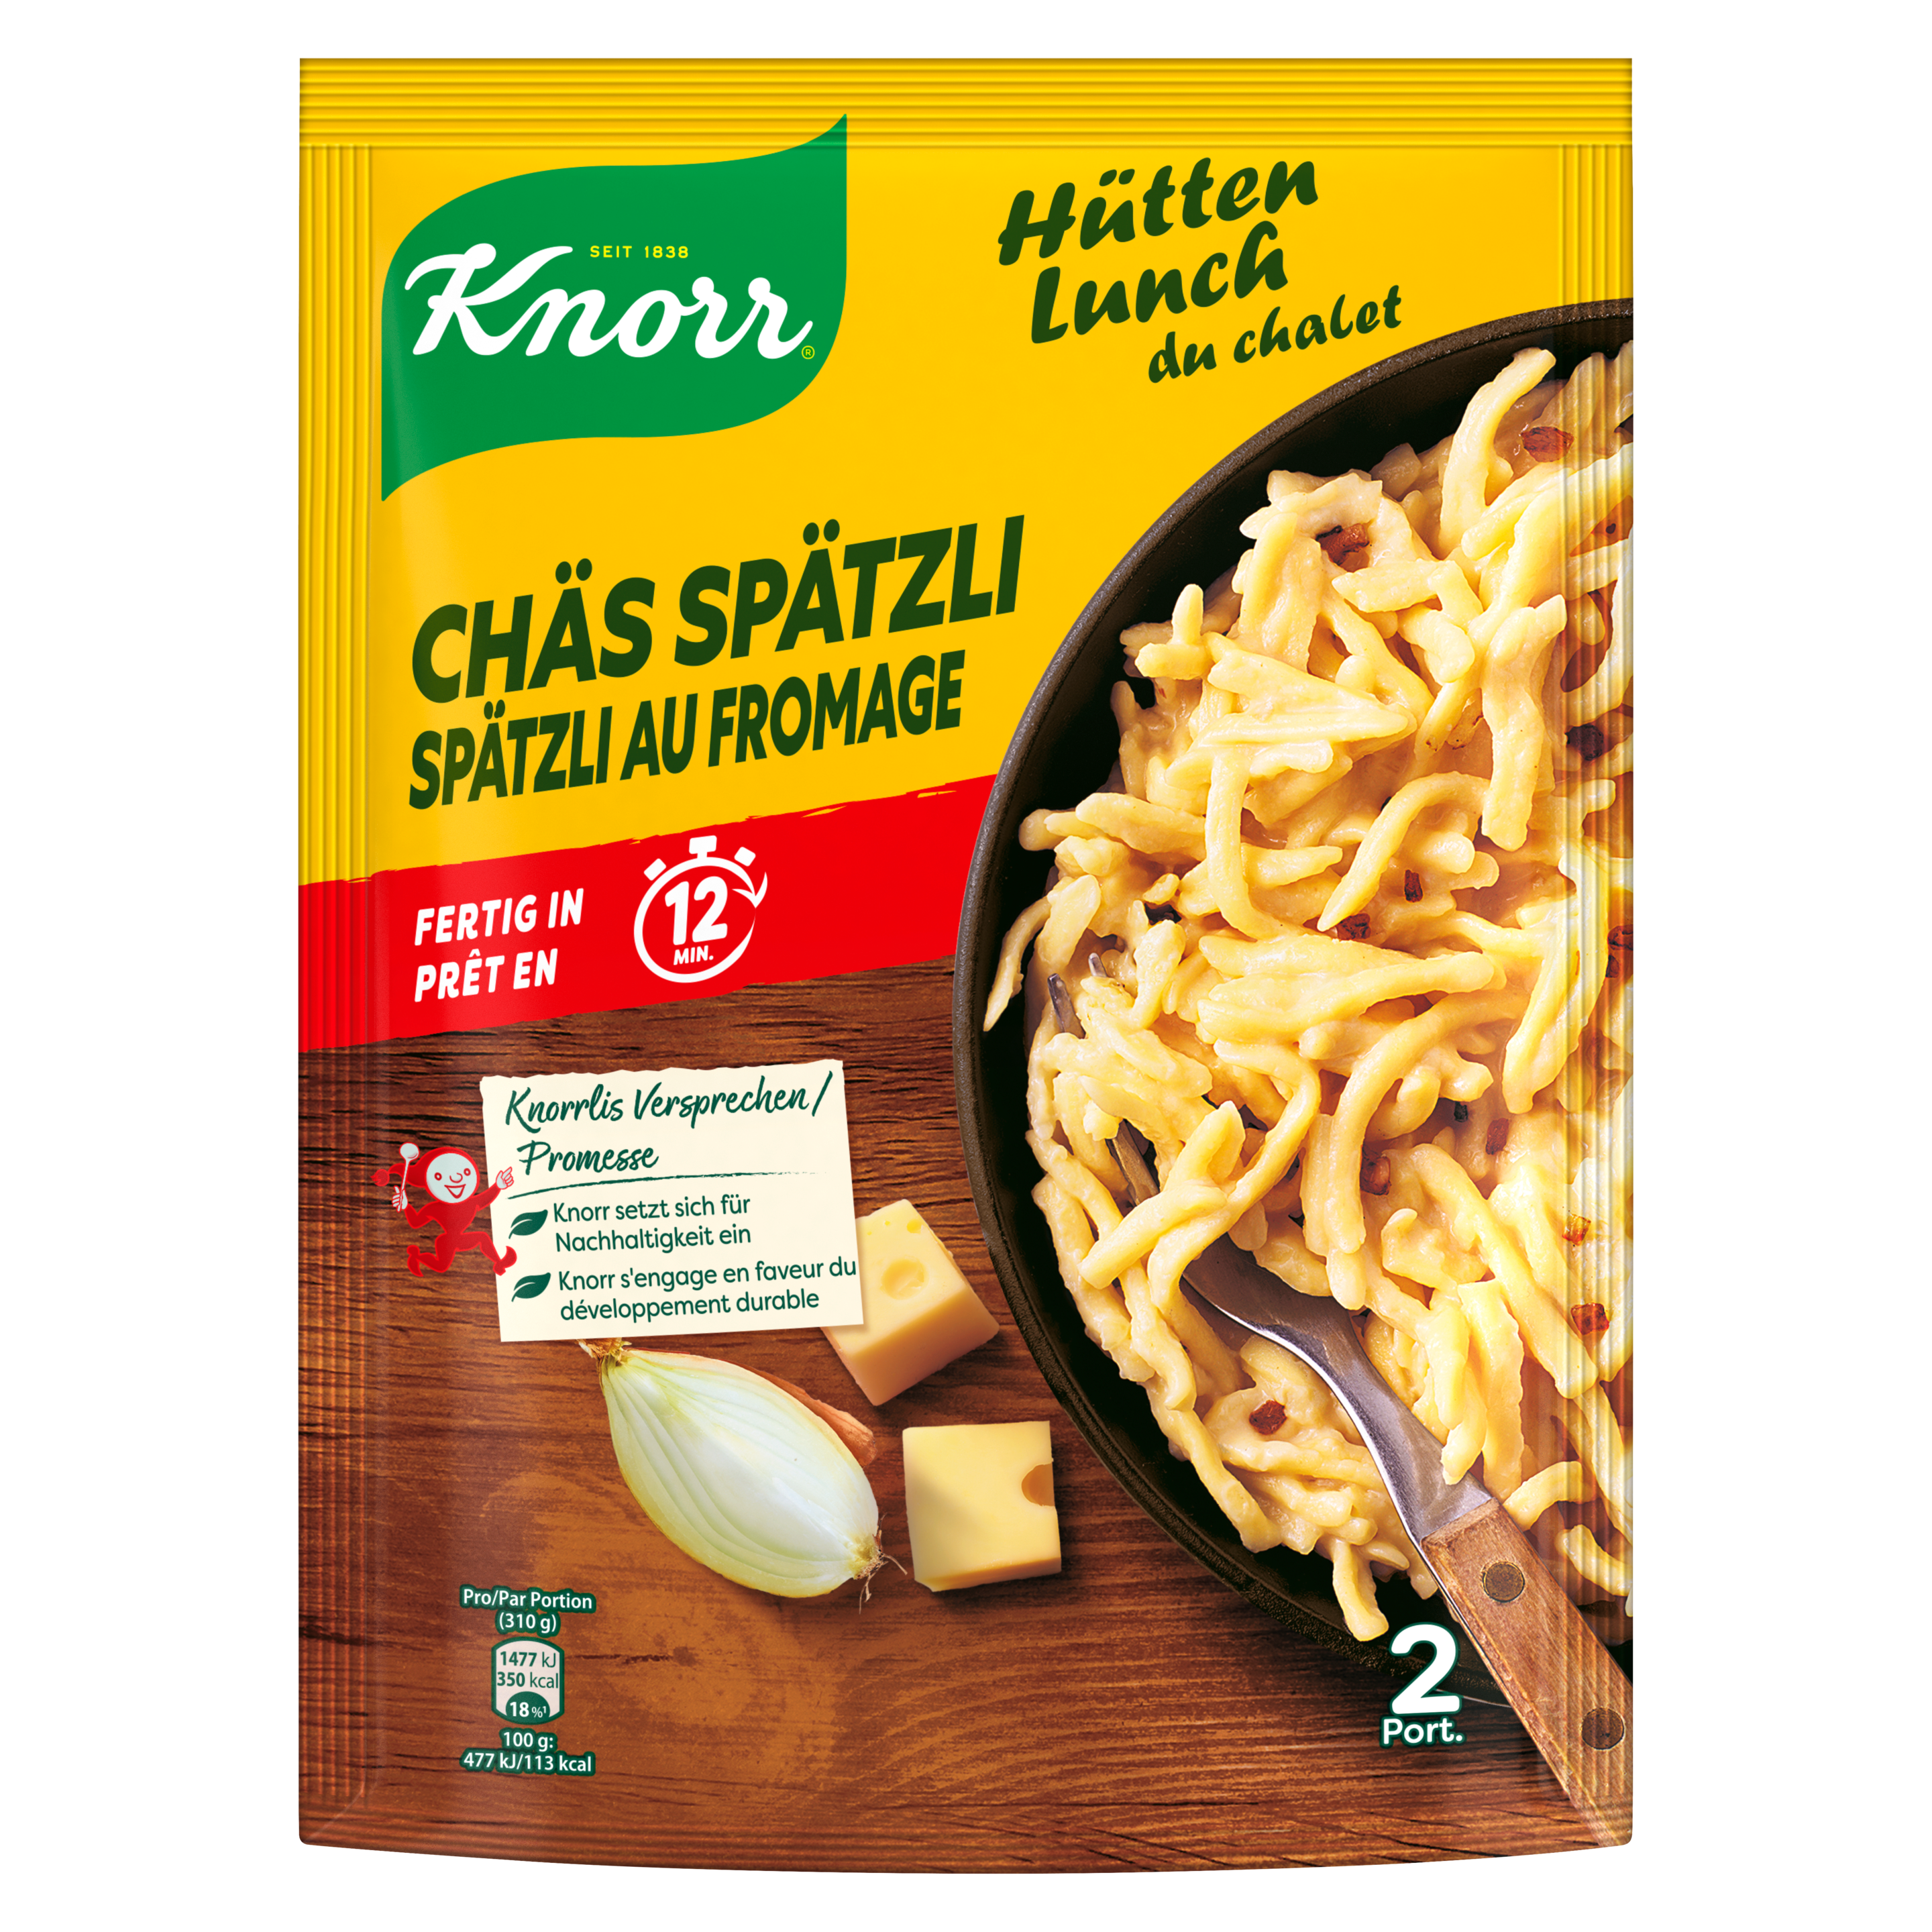 KNORR Lunch du chalet Spätzli au fromage sachet 2 portions